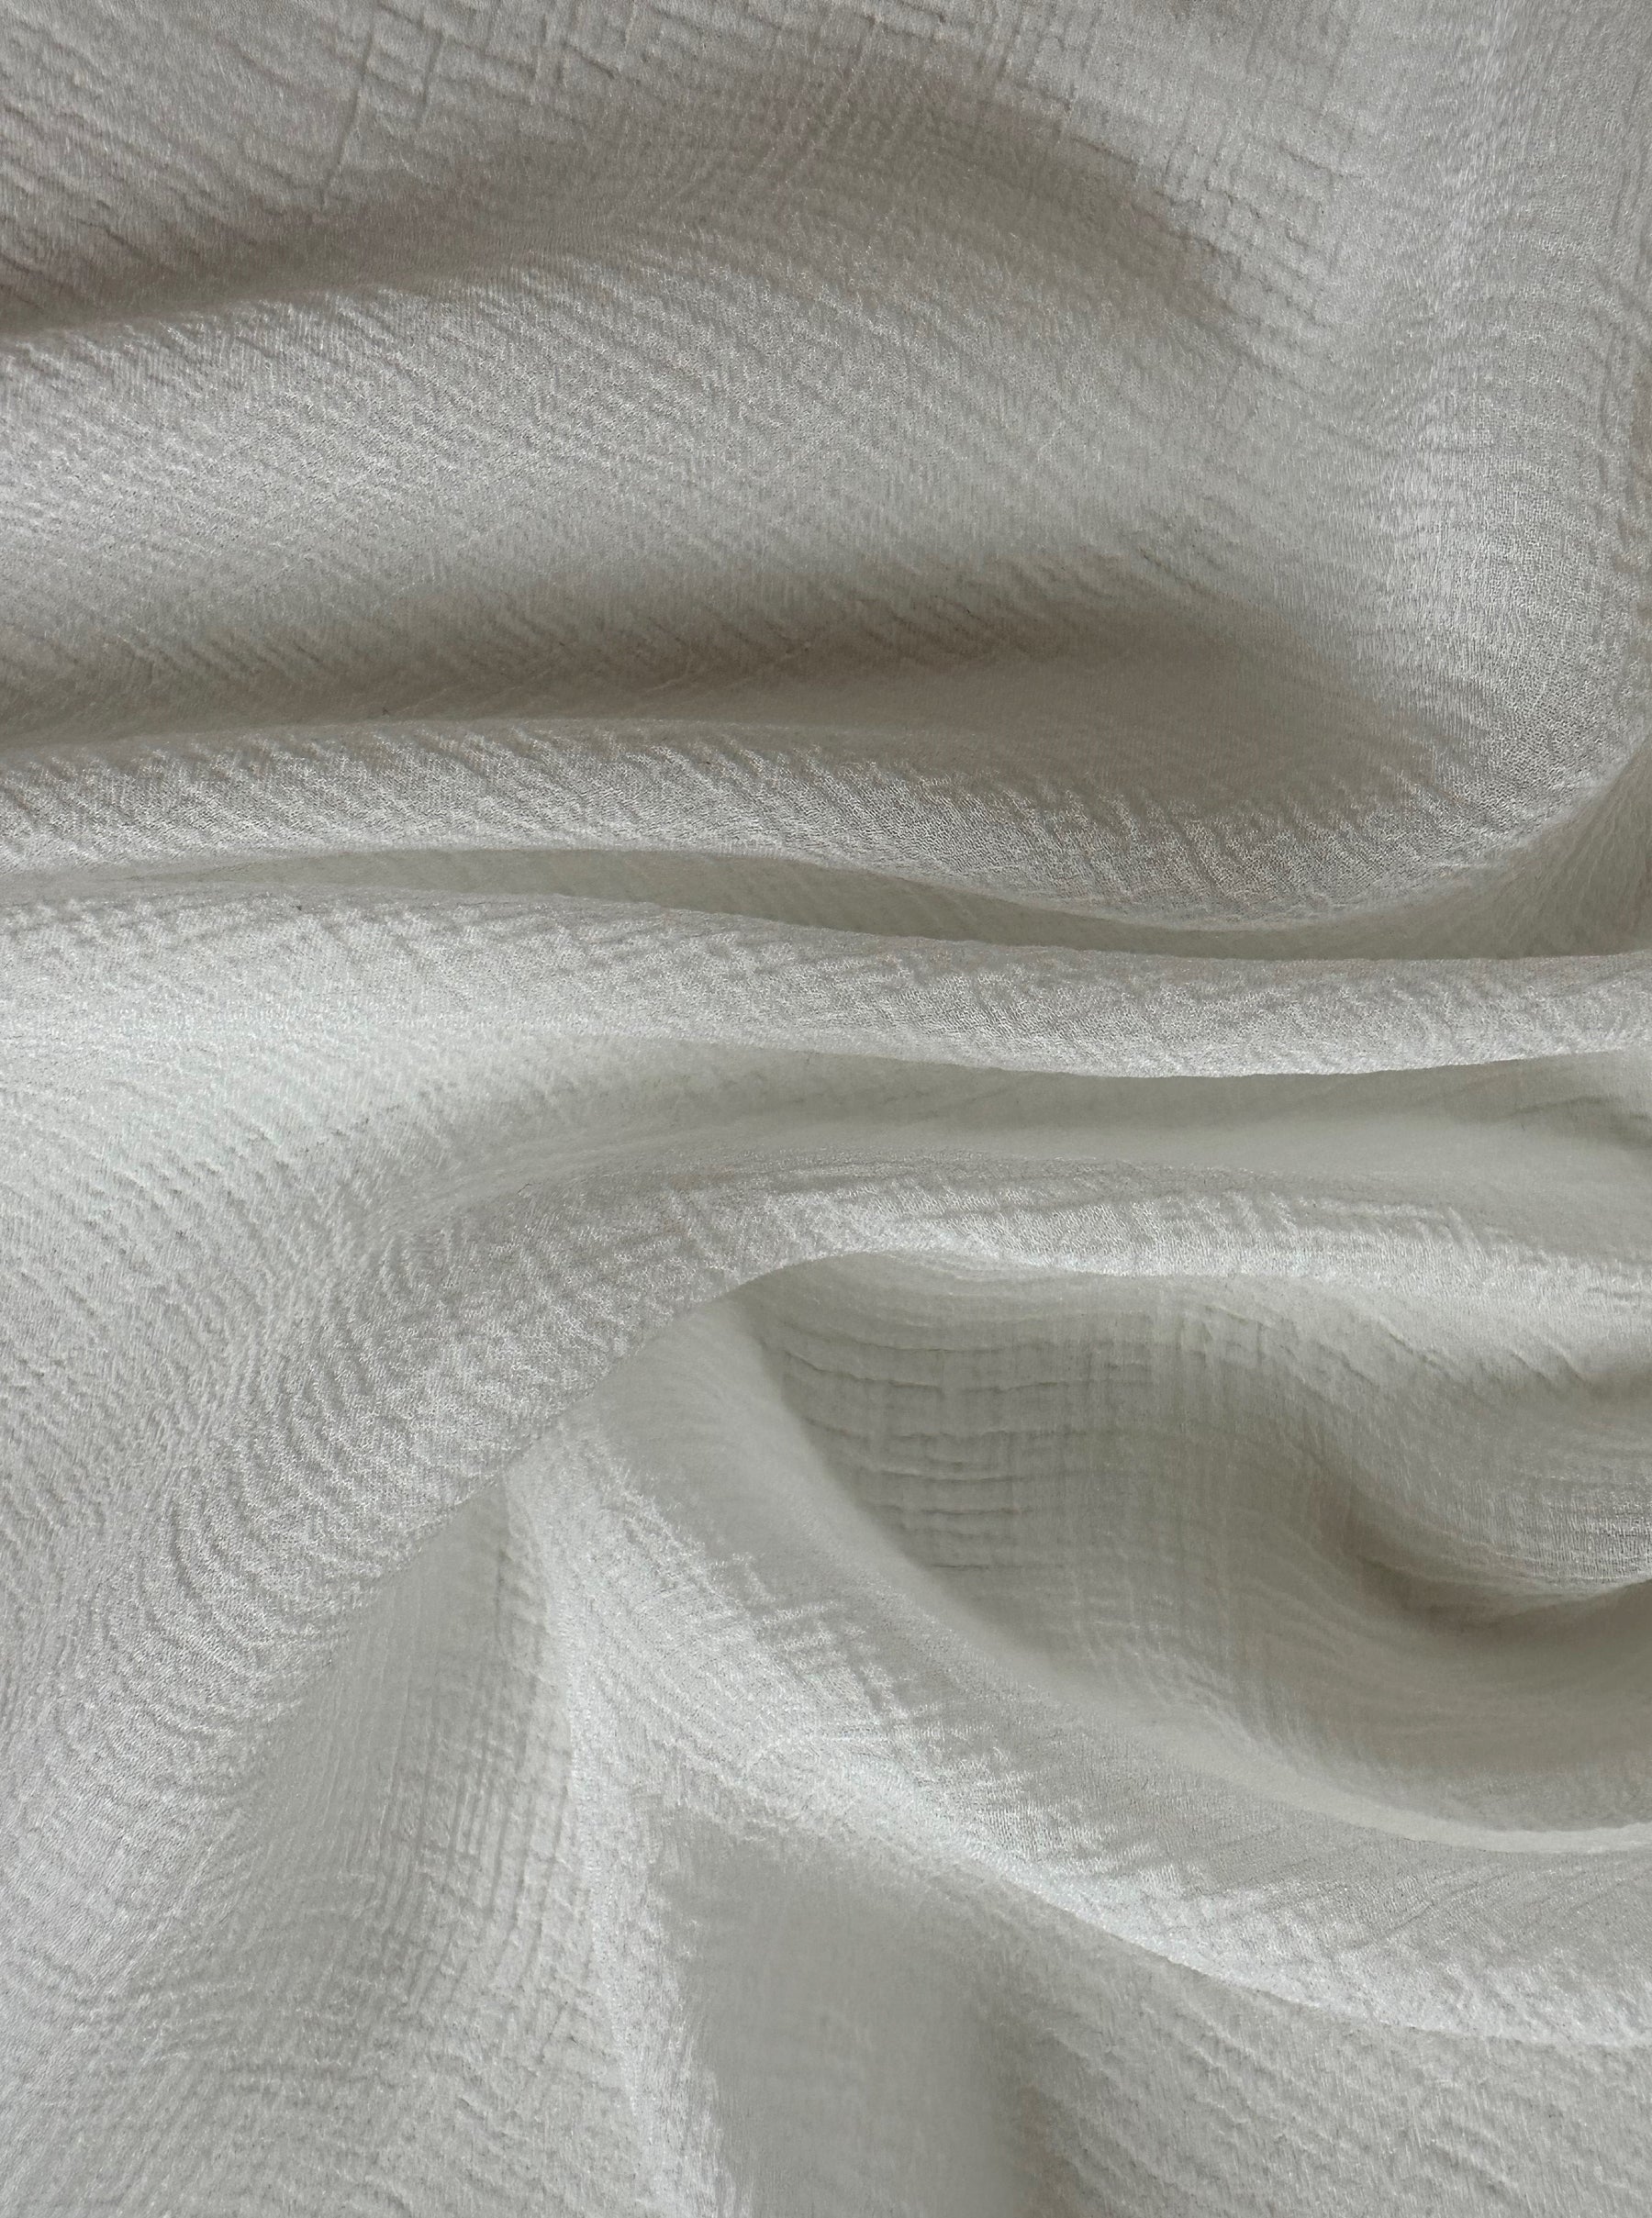 Ivory Embroidery Lace on Silk Fabric,crinkle Silk Chiffon Lace